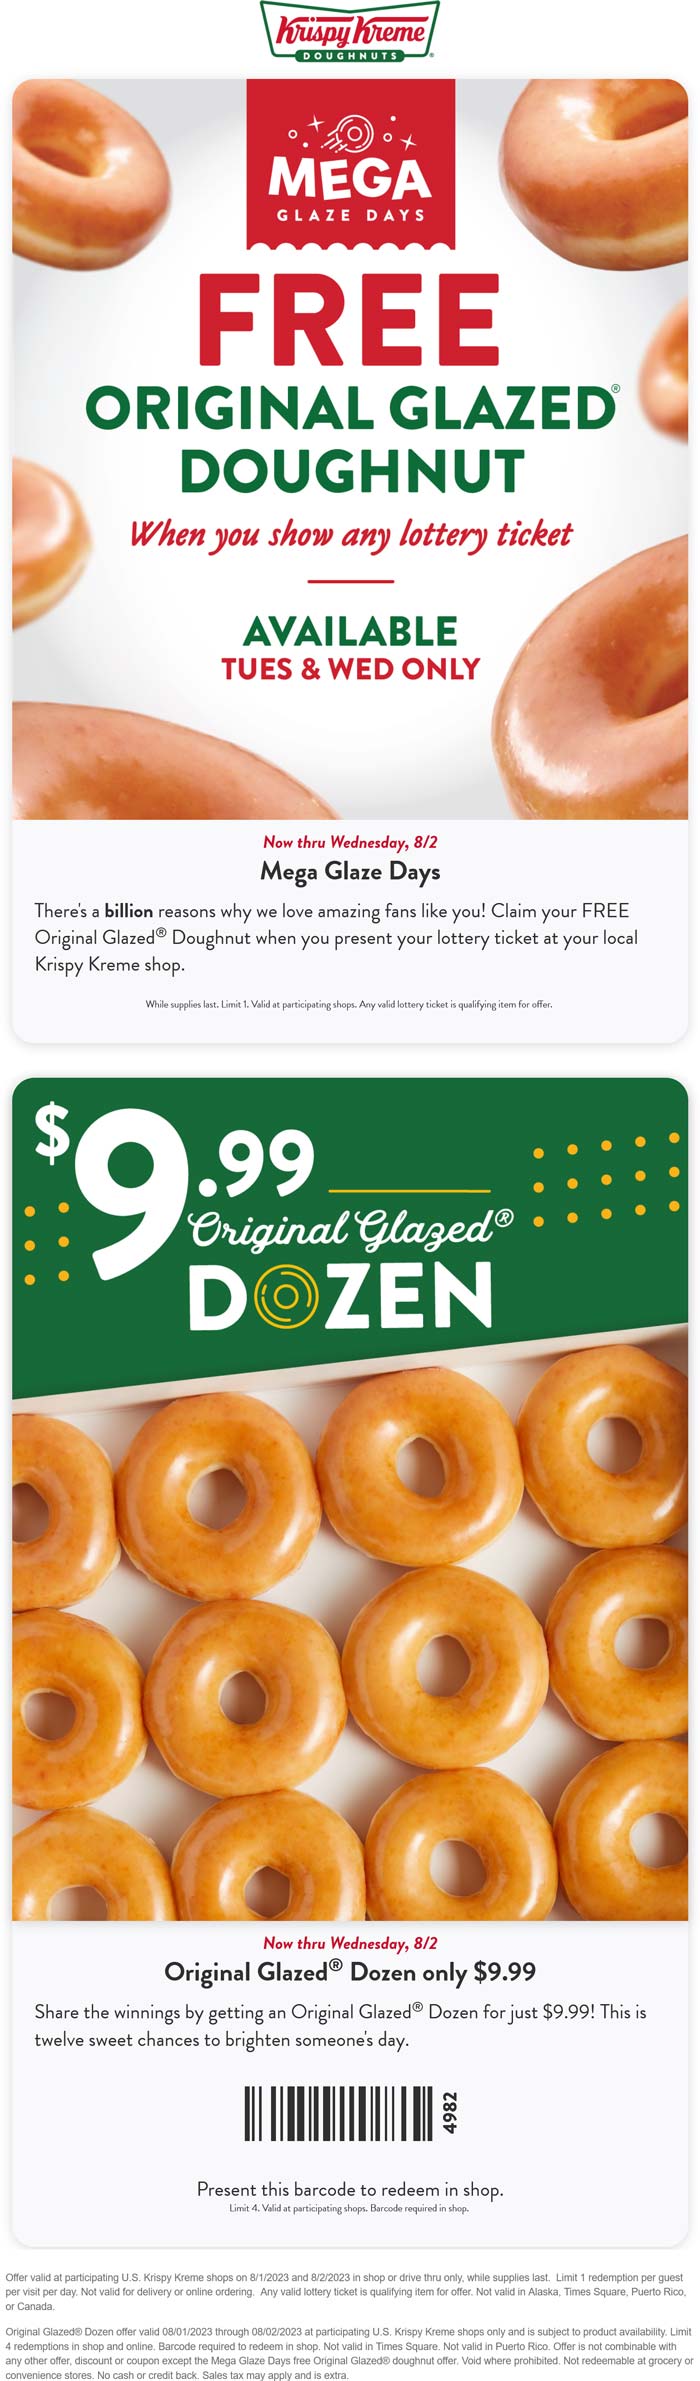 Krispy Kreme restaurants Coupon  Free doughnut Tues with your lottery ticket & $10 dozen Weds at Krispy Kreme #krispykreme 